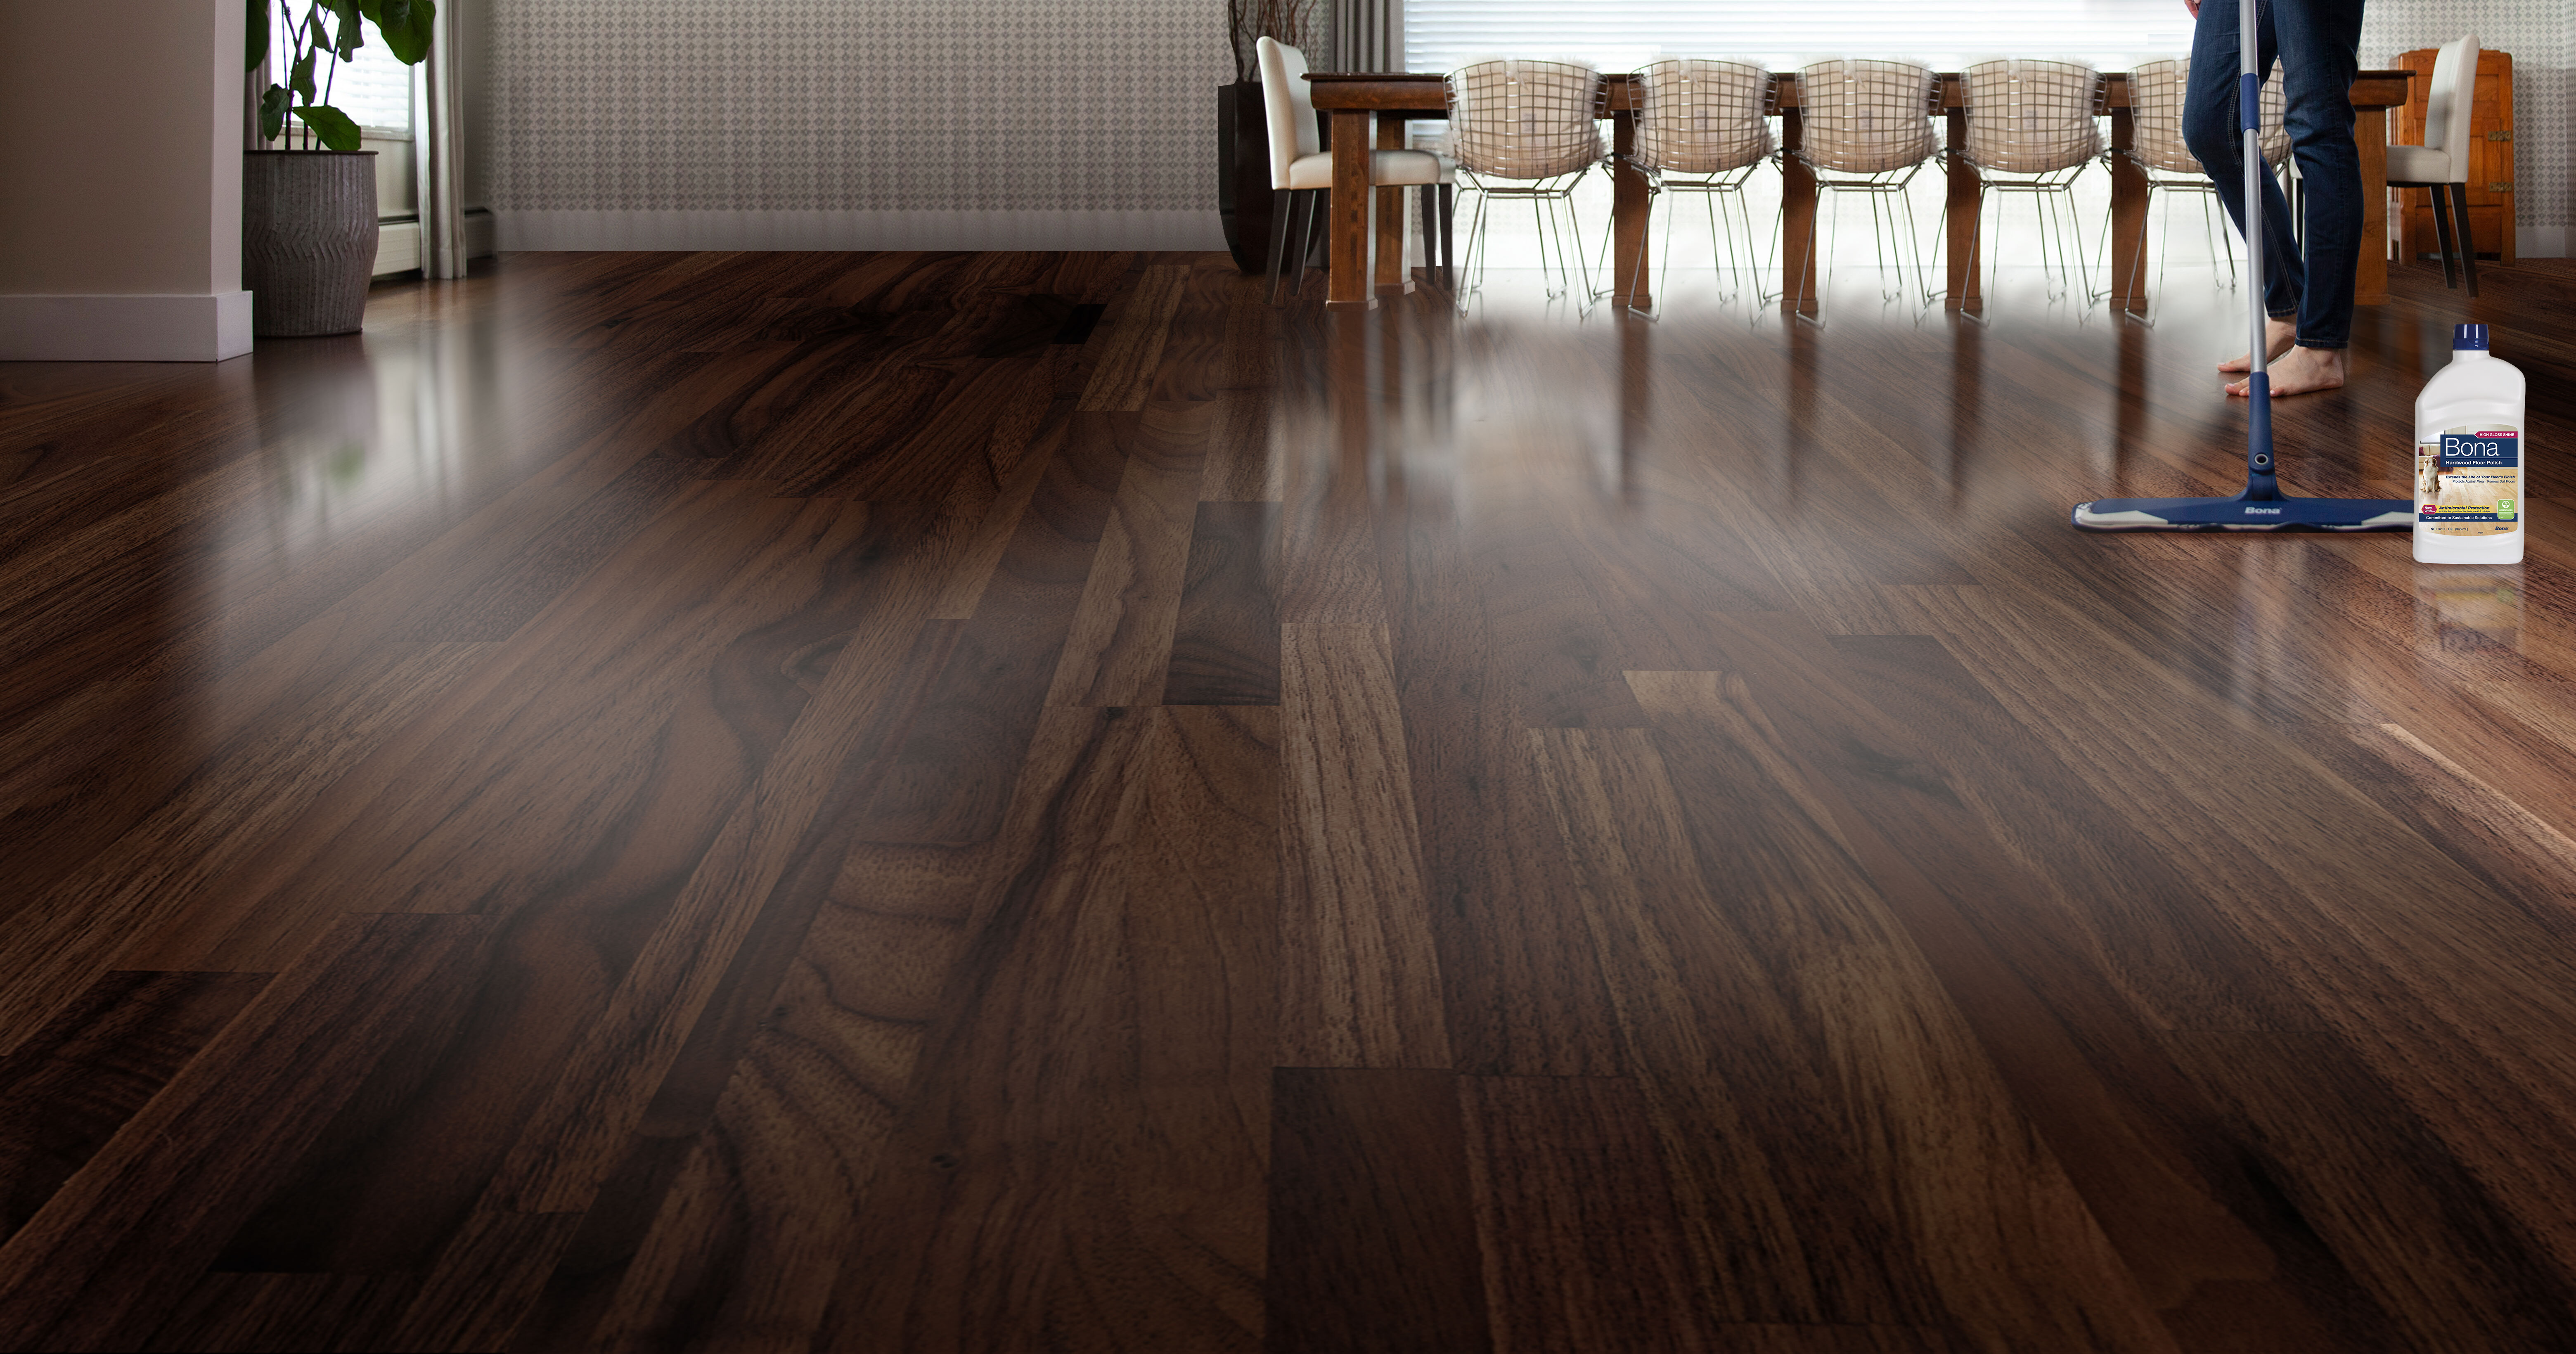 How To Polish Hardwood Floors Do S And, How To Clean Glossy Hardwood Floors